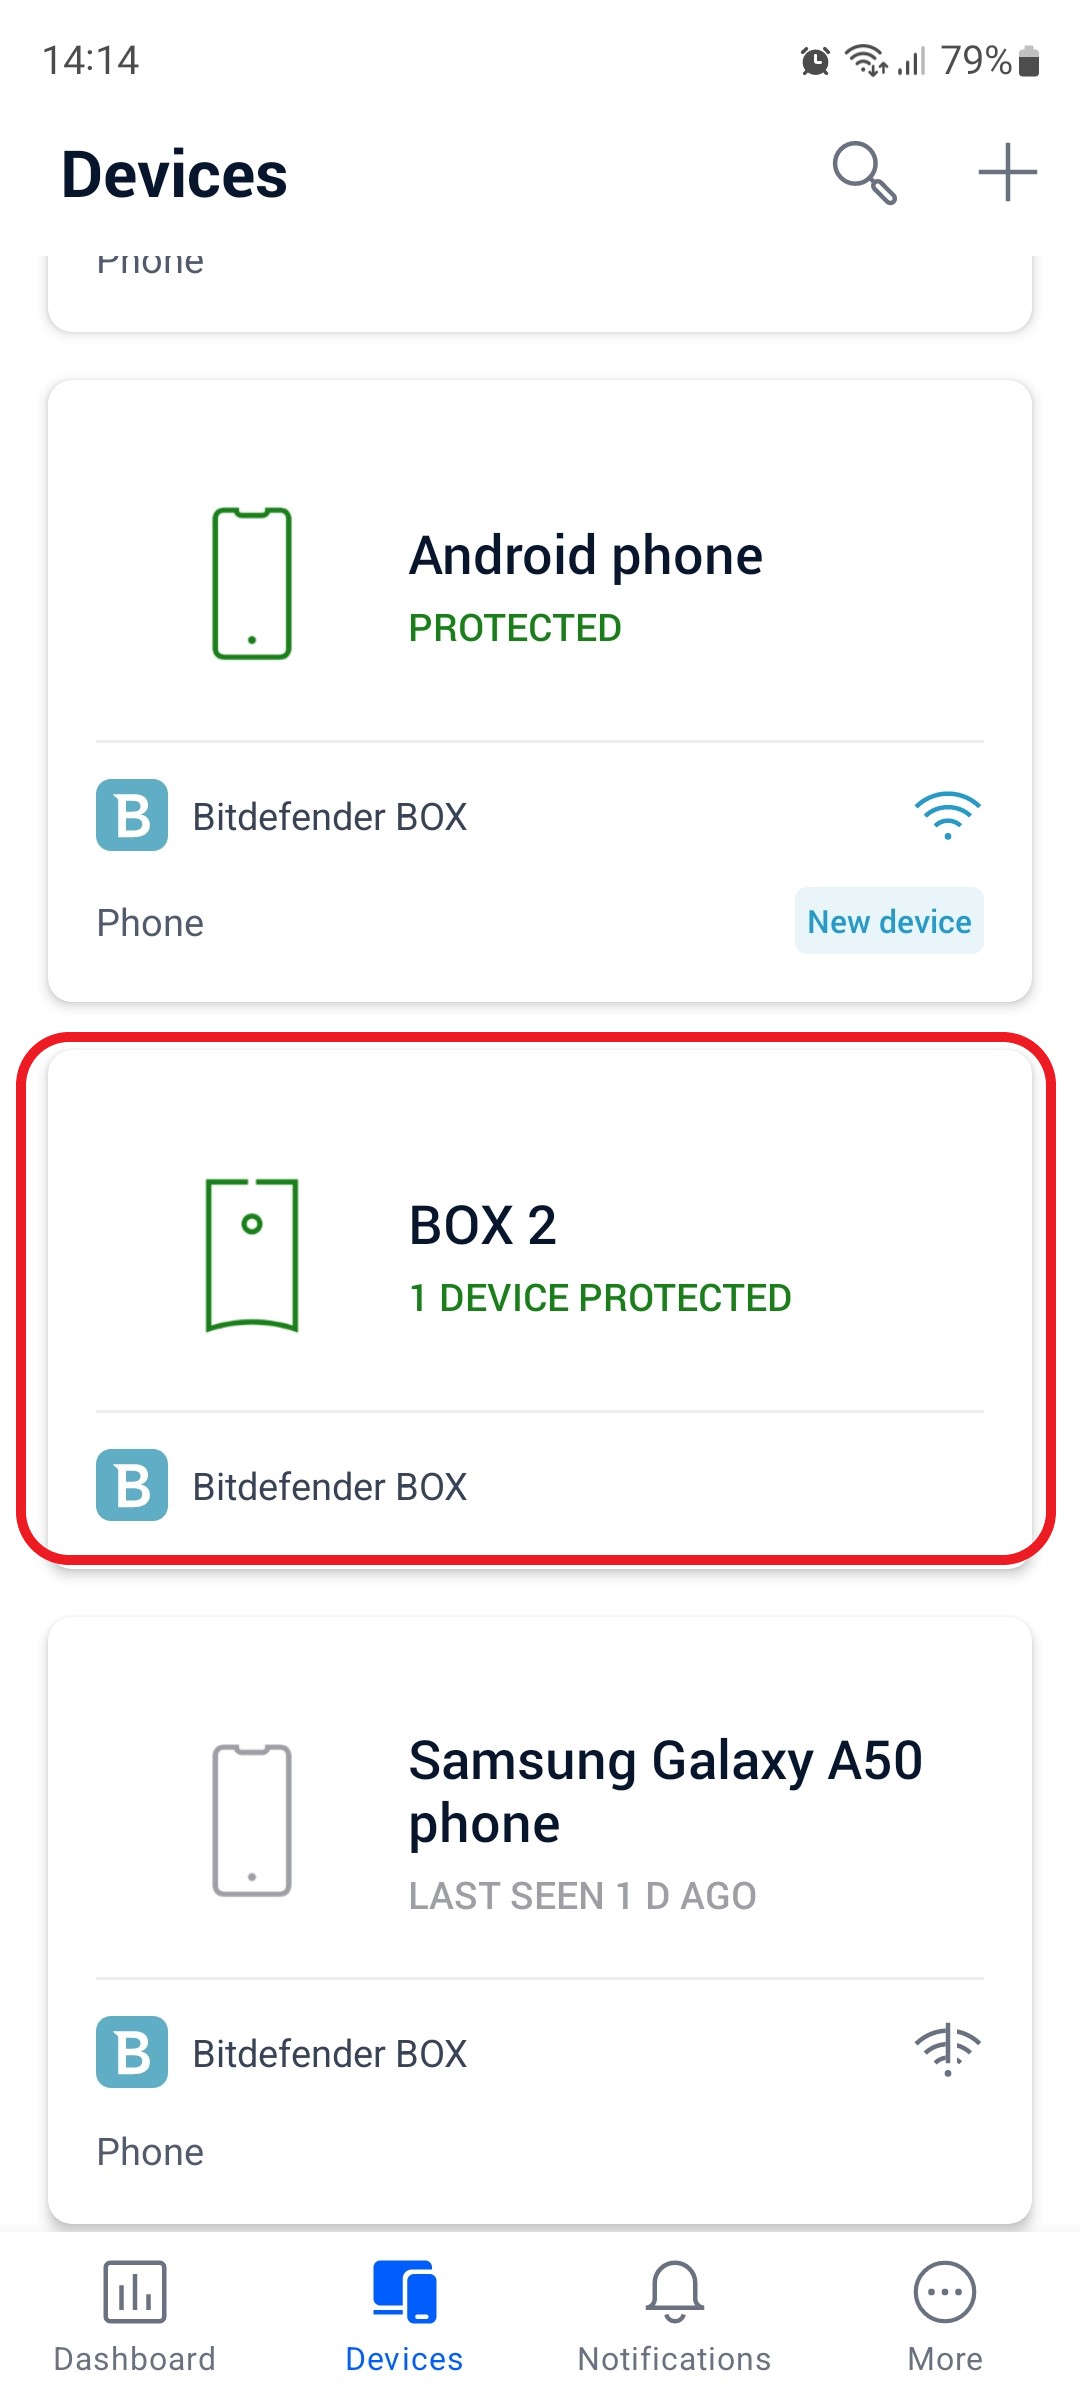 Bitdefender BOX - Devices